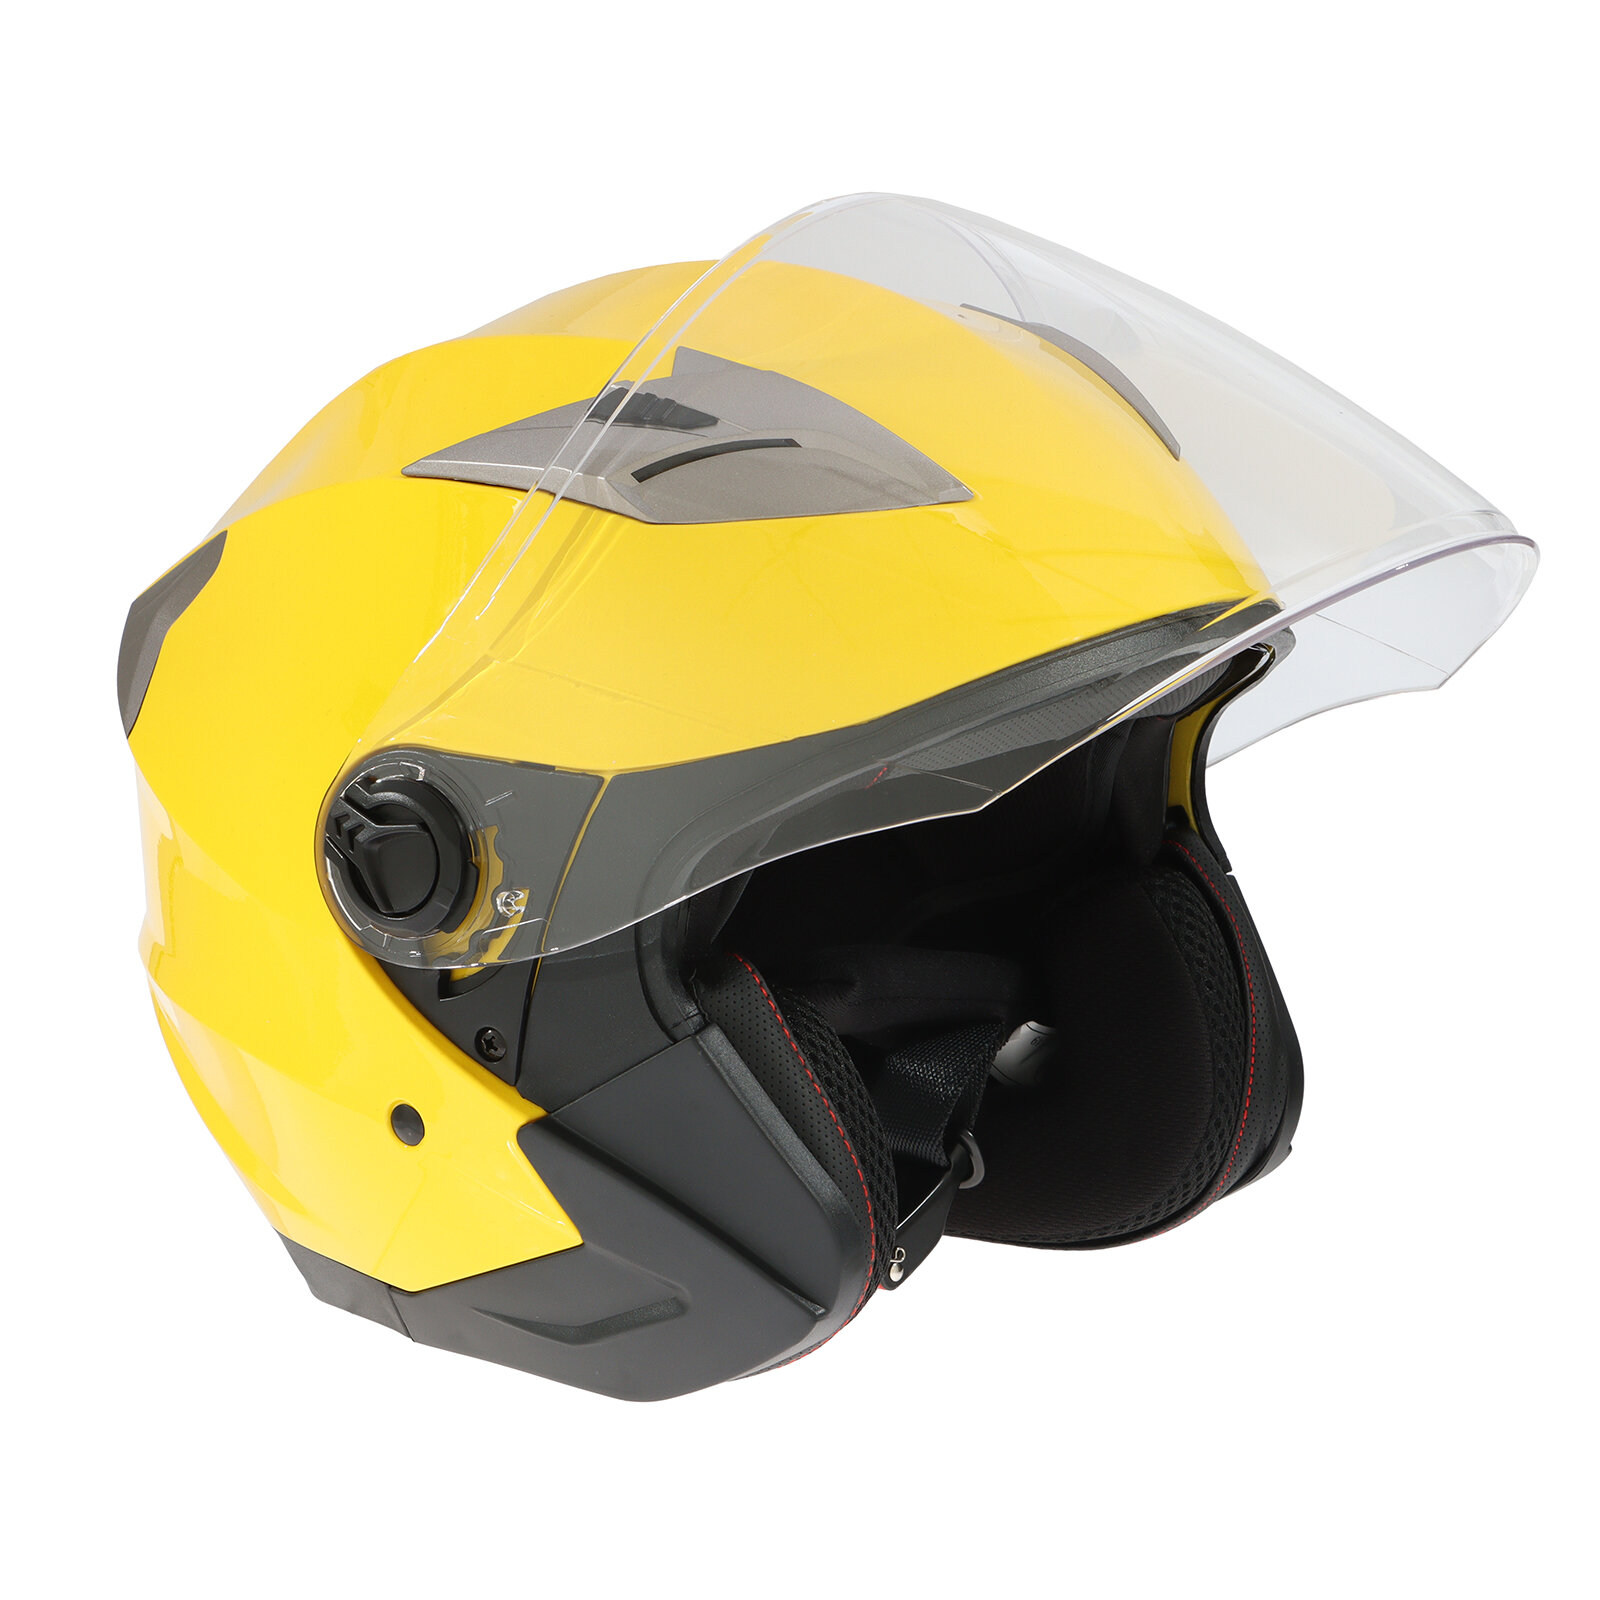 Шлем открытый с двумя визорами размер L модель - BLD-708E желтый глянцевый 9845823